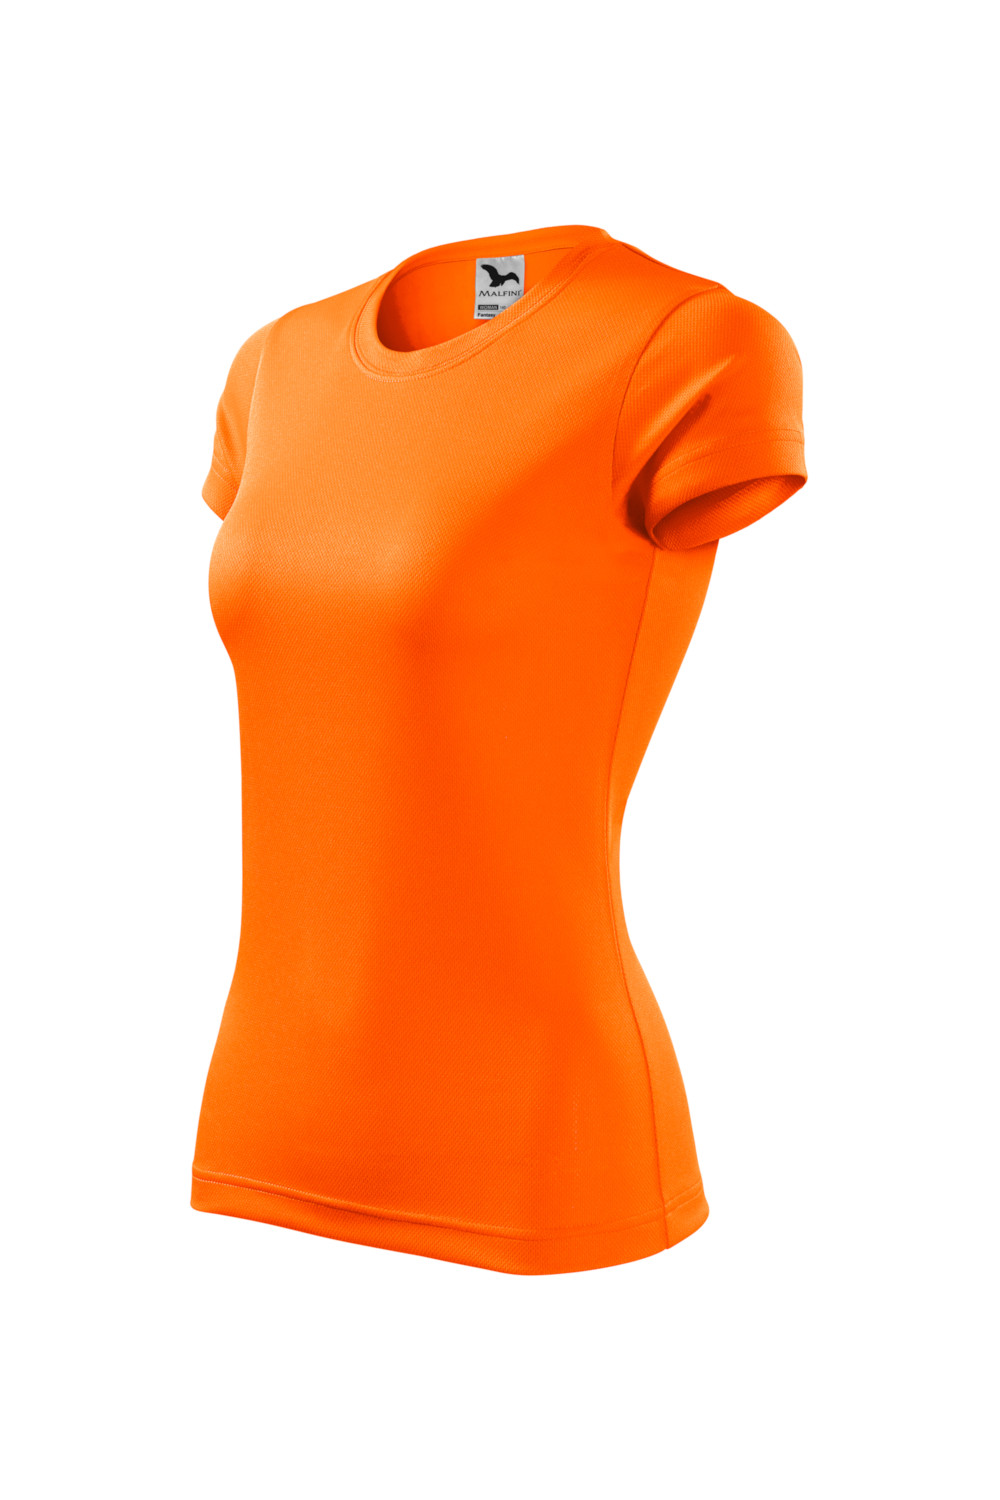 Koszulka damska sportowa poliester FANTASY 140 neon orange